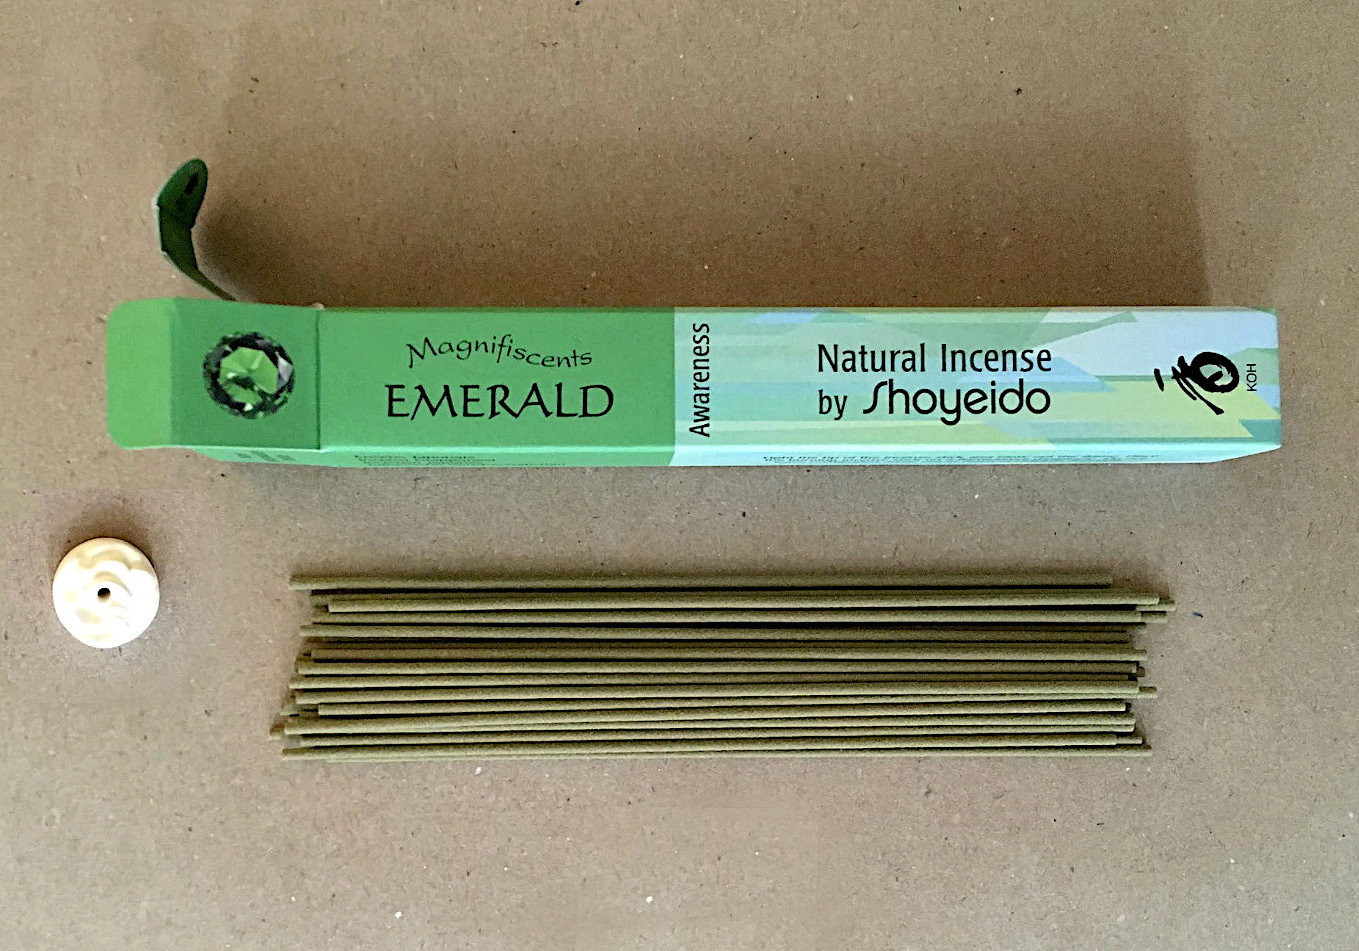 Shoyeido Jewel Series incense - Emerald "Awareness"